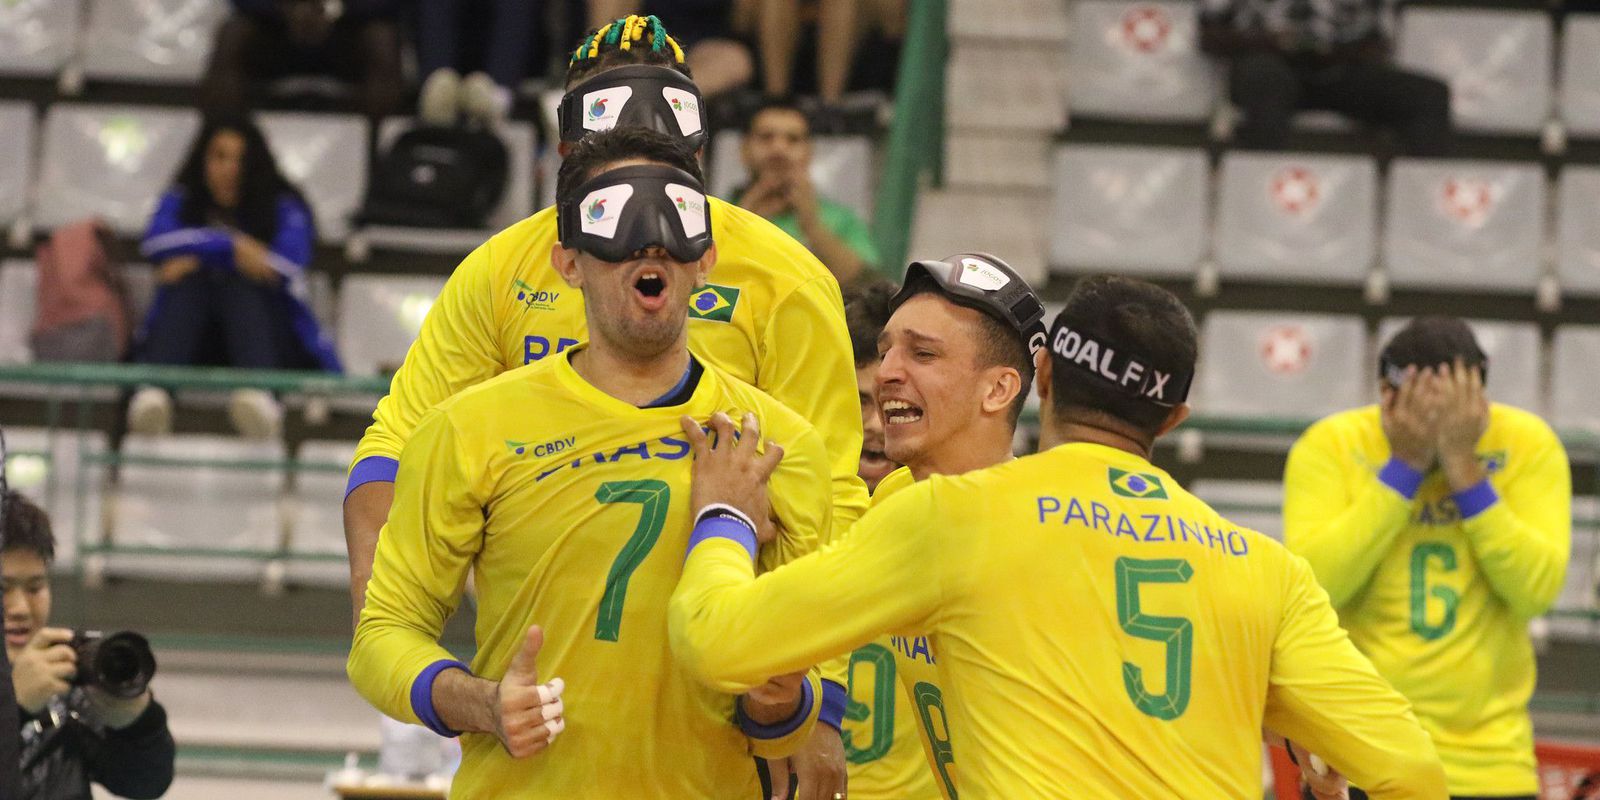 Brazil wins and wins the third goalball world championship